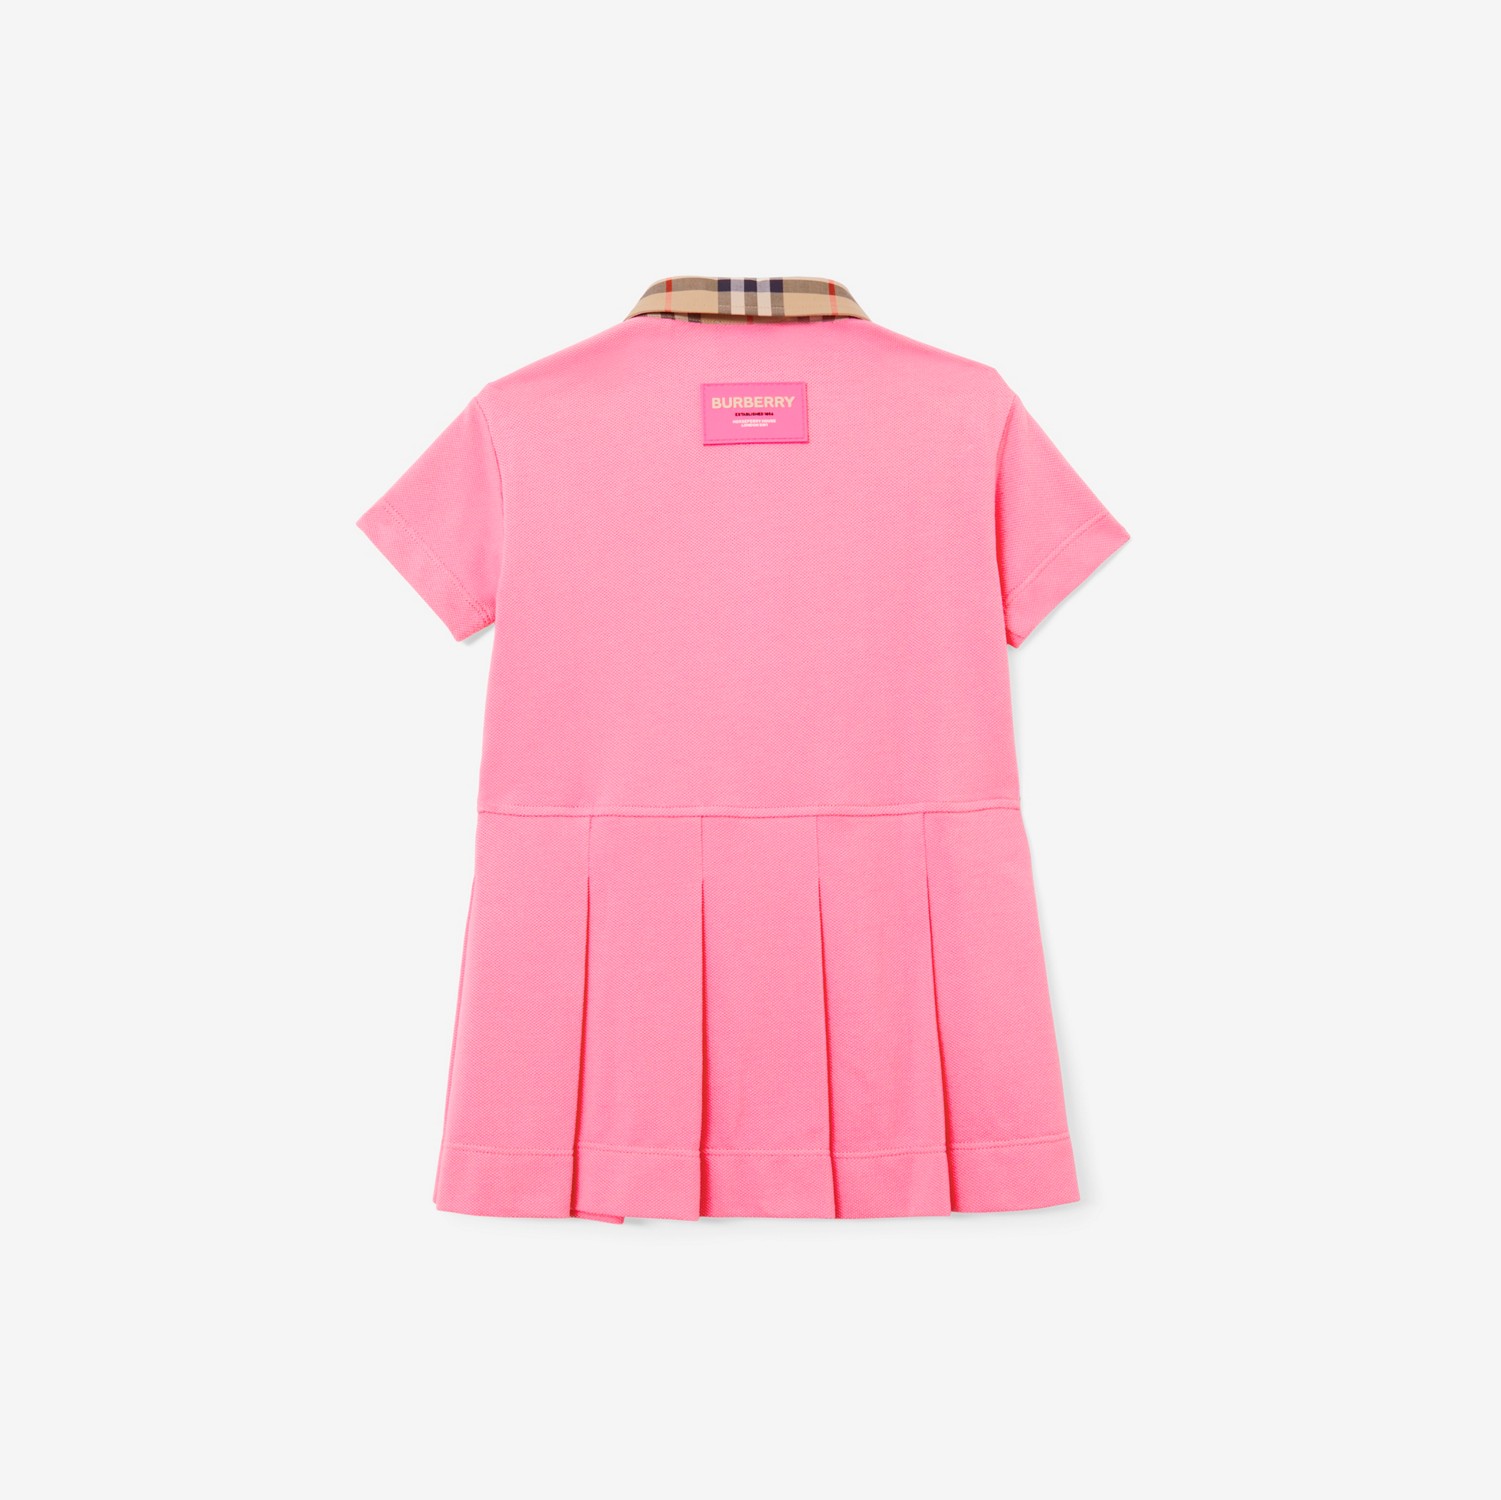 Vintage Check Trim Cotton Polo Shirt Dress in Bubblegum Pink - Children | Burberry® Official